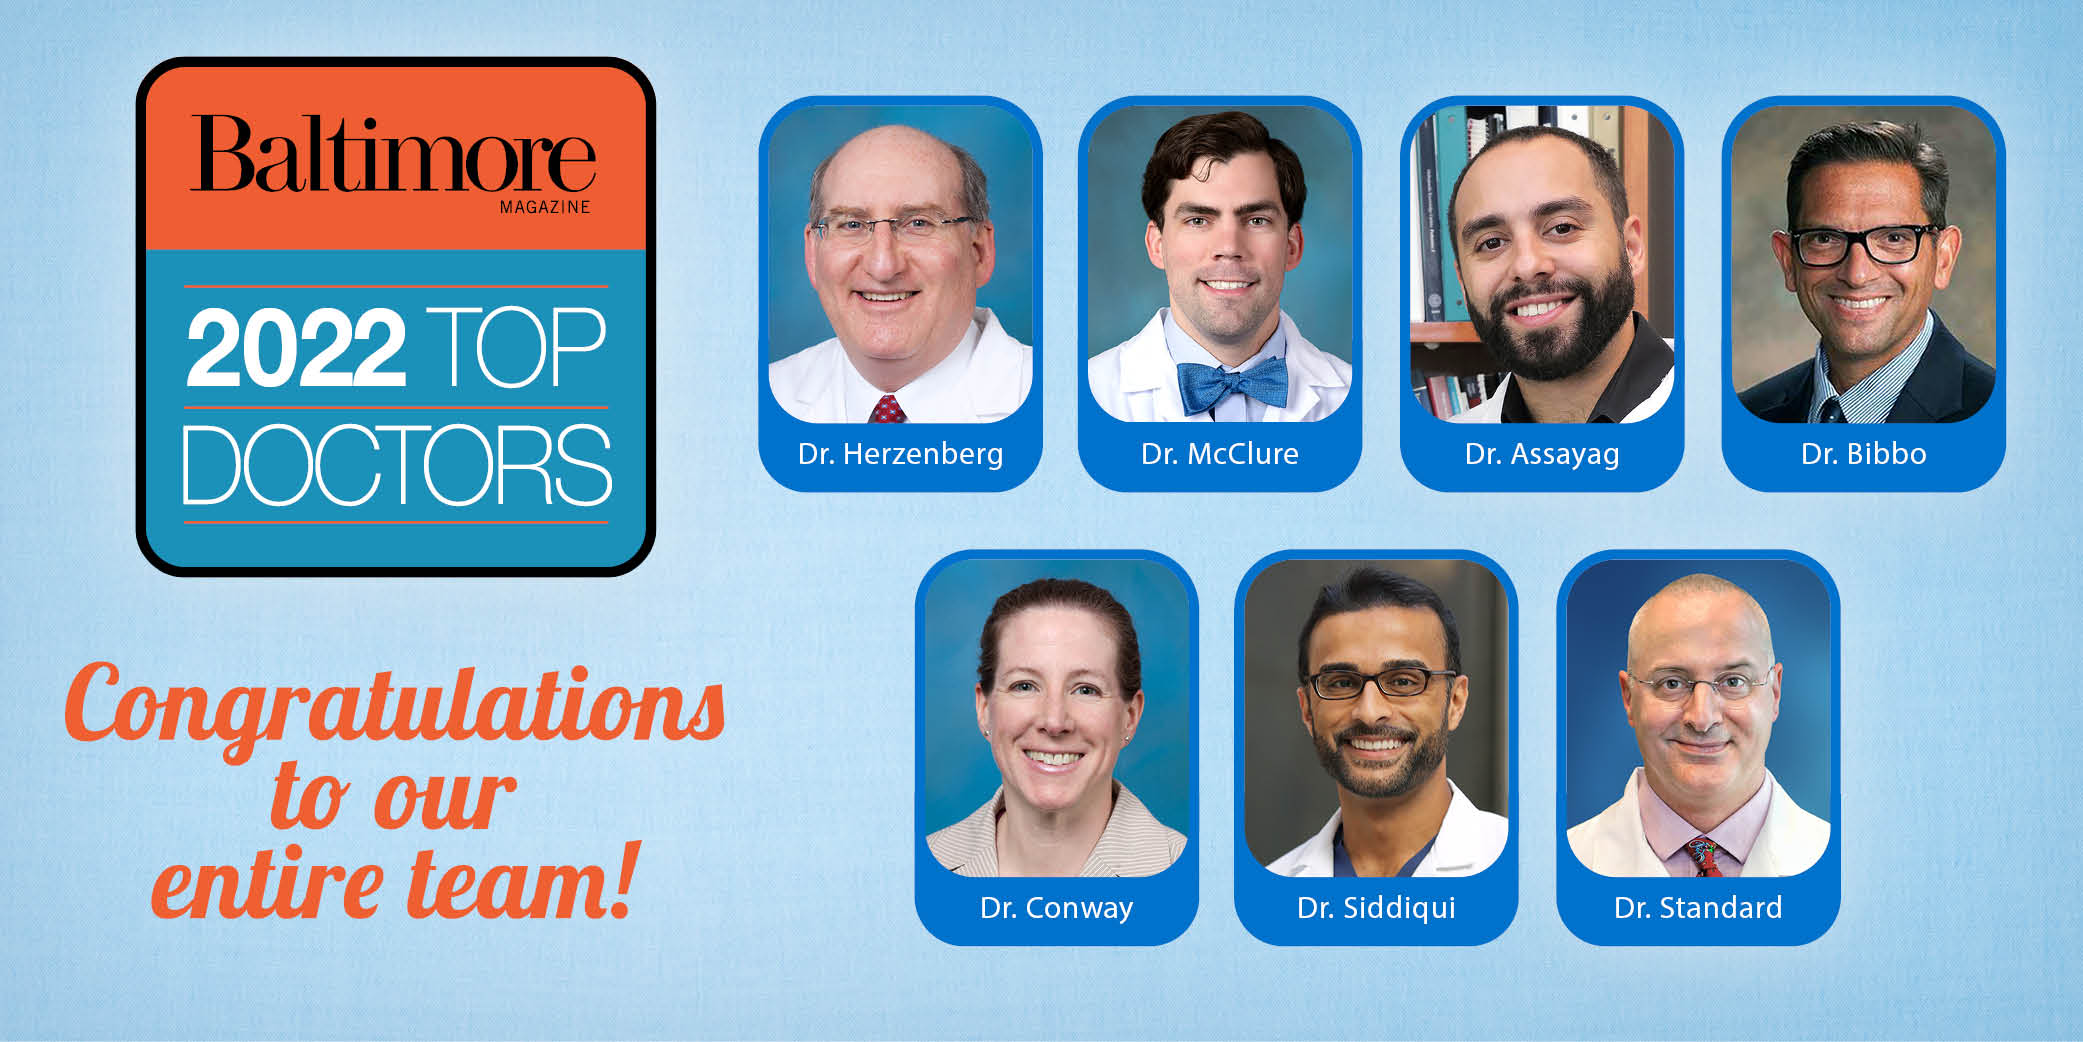 Dr. Herzenberg, Dr. McClure, Dr. Assayag, Dr. Bibbo, Dr. Conway, Dr. Siddiqui and Dr. Standard with Baltimore Magazine 2022 Top Doctors logo